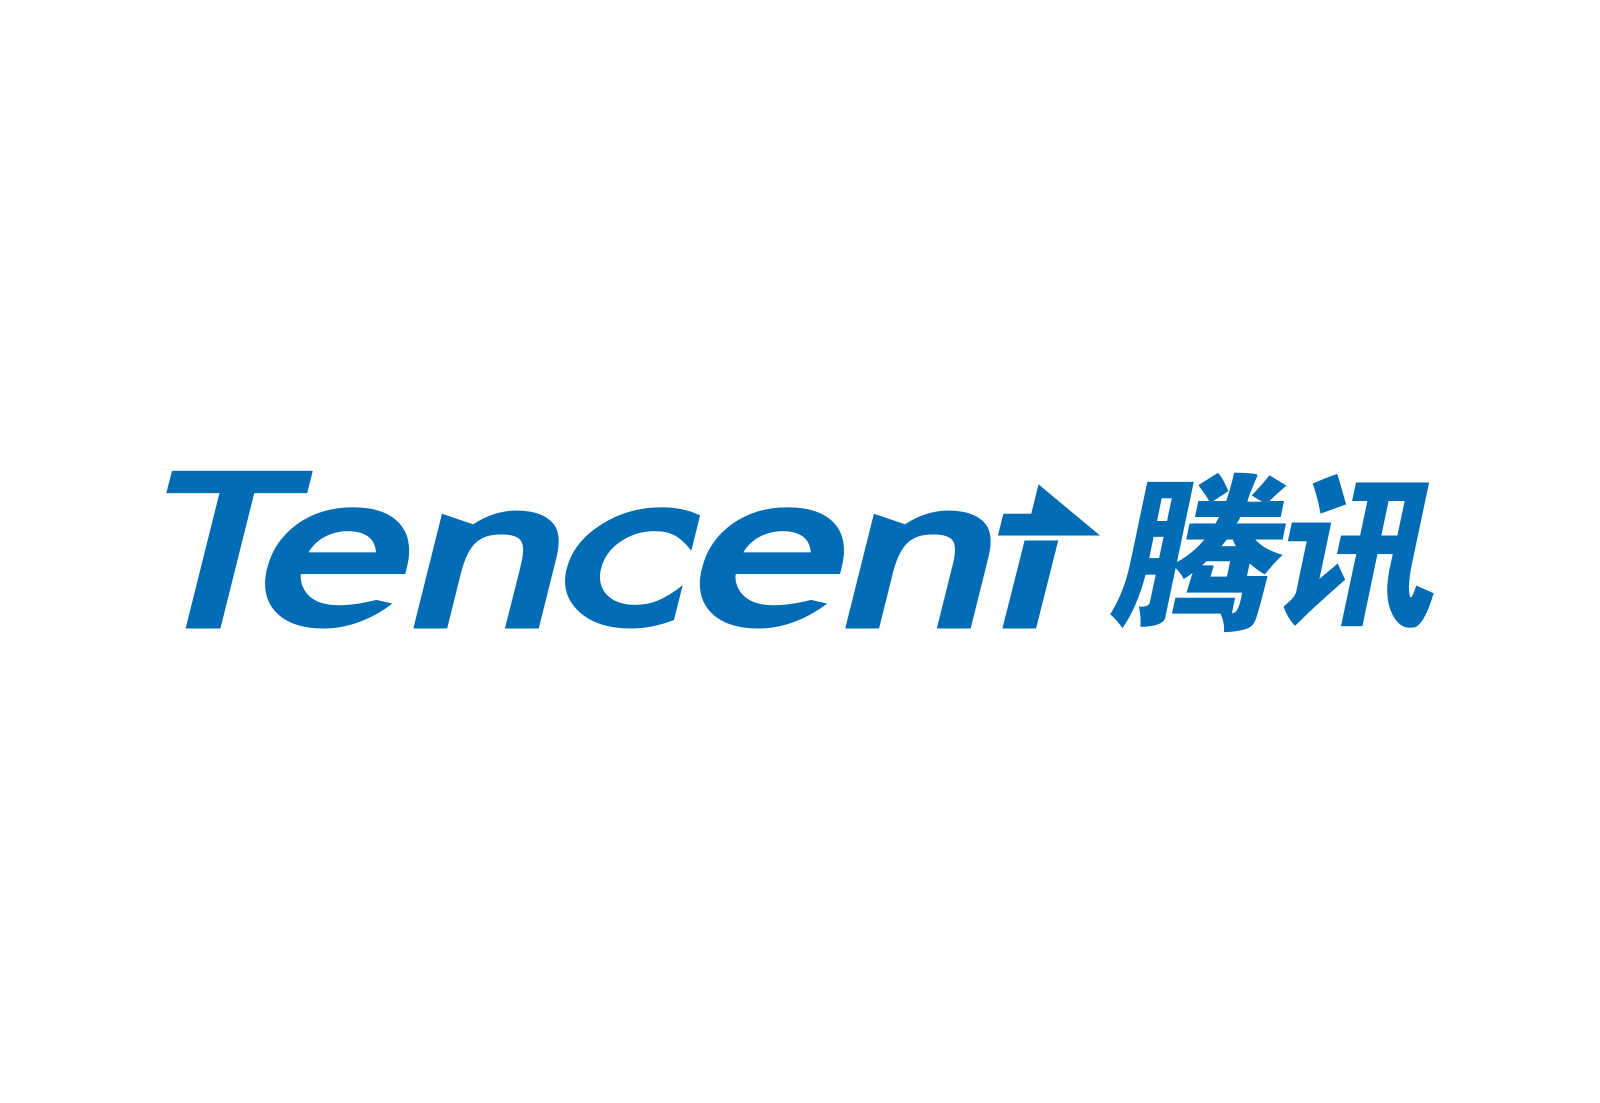 Tencent makes $72 million str